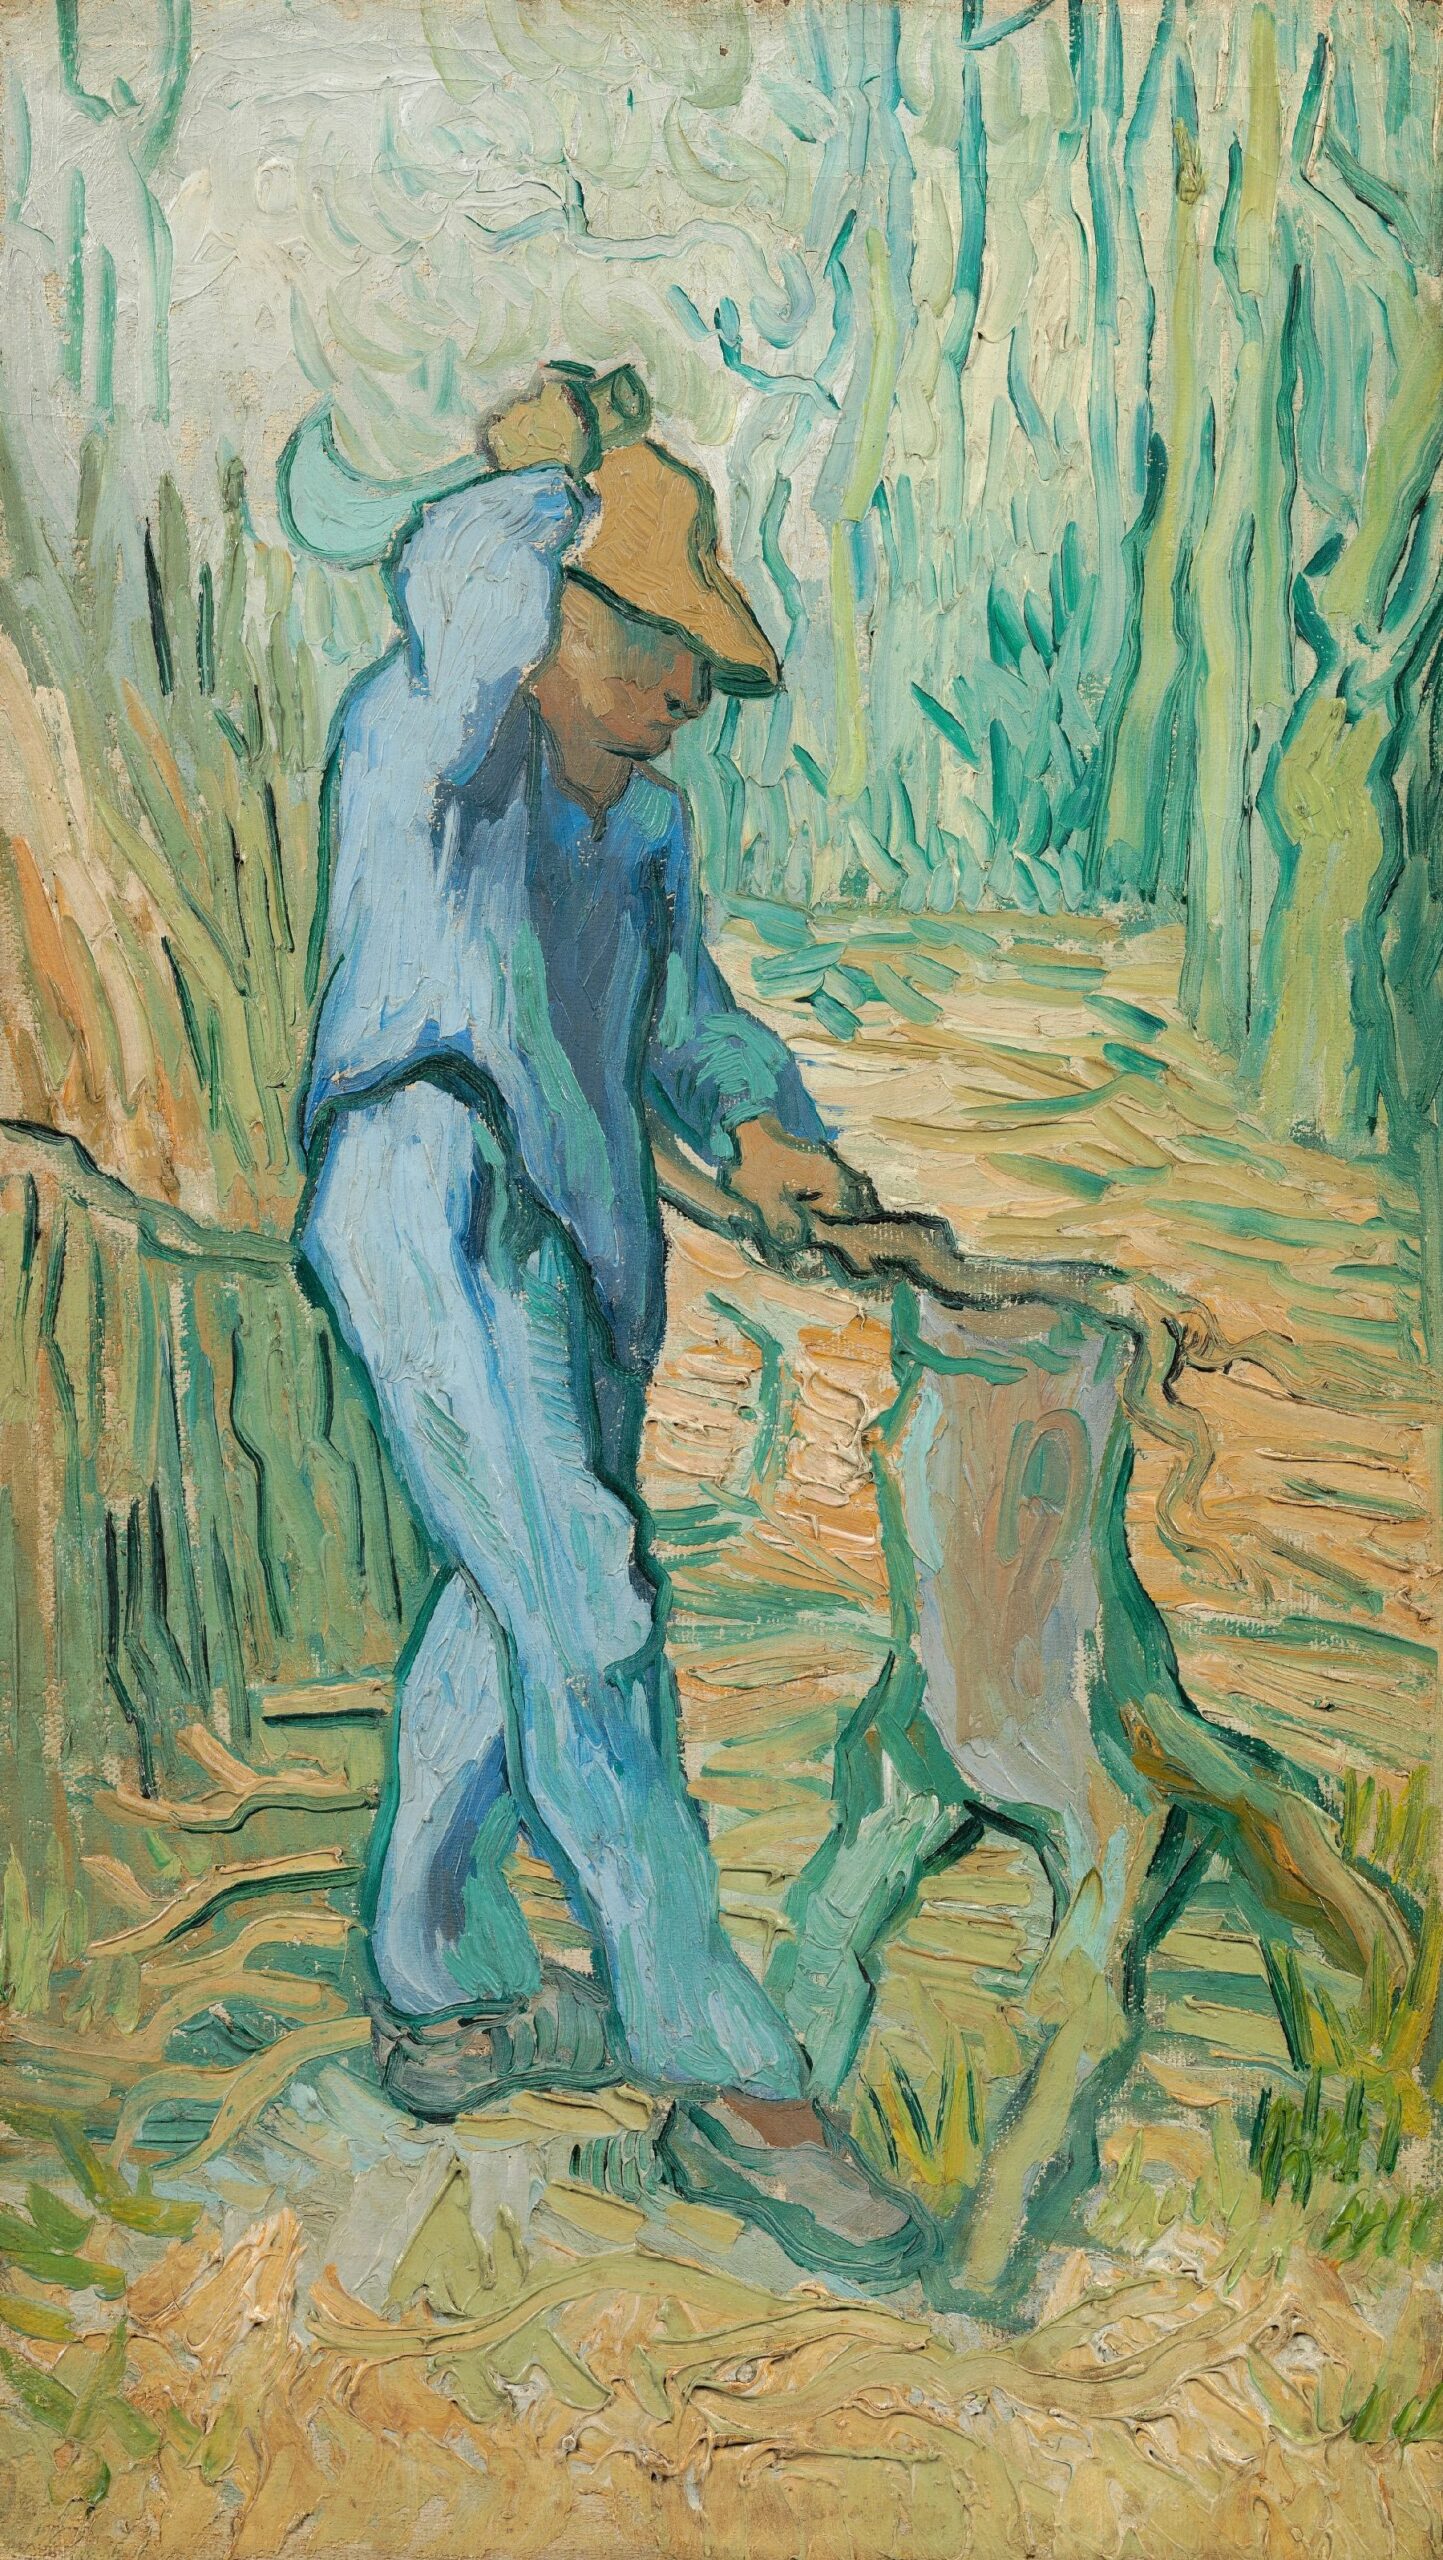 De houthakker (naar Millet) Vincent van Gogh (1853 - 1890), Saint-Rémy-de-Provence, september 1889